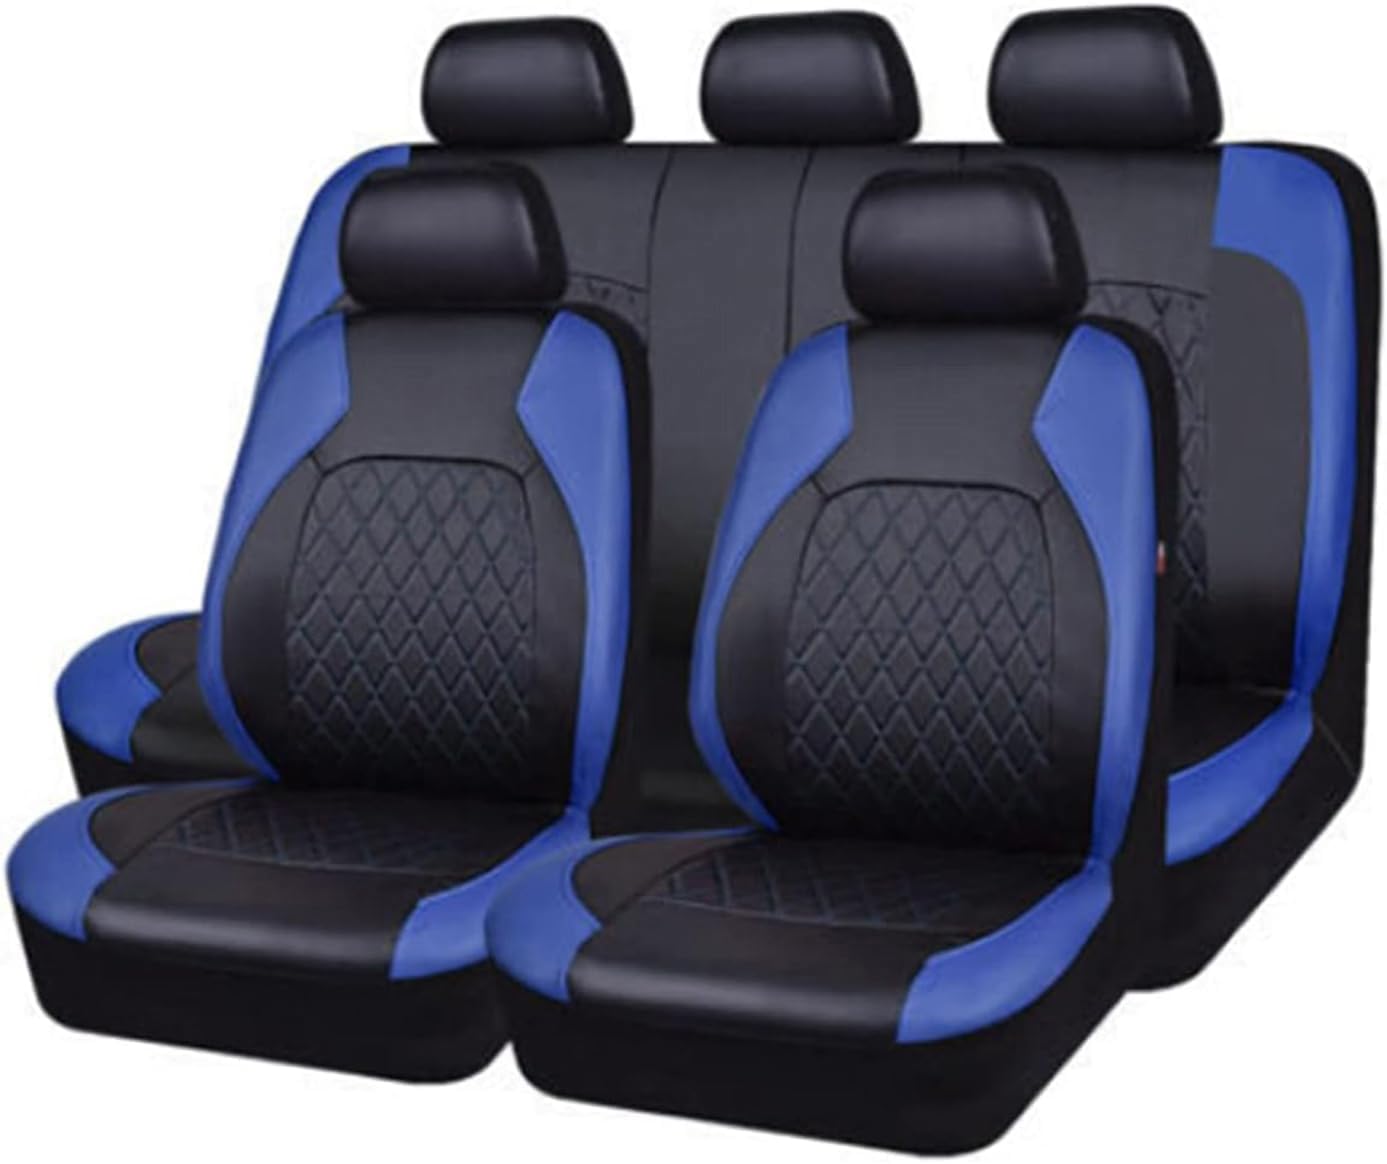 Auto Leder Sitzbezüge für BMW F10 E36 E39 E30 X3 E83 E90 E60 X5 E53 F30 E34 X5 E70 F15 G30 E91 Touring X6, 9 Stück Allwetter rutschfest Wasserdicht Atmungsaktiv Schonbezug Set Sitzkissenschutz von SARCX